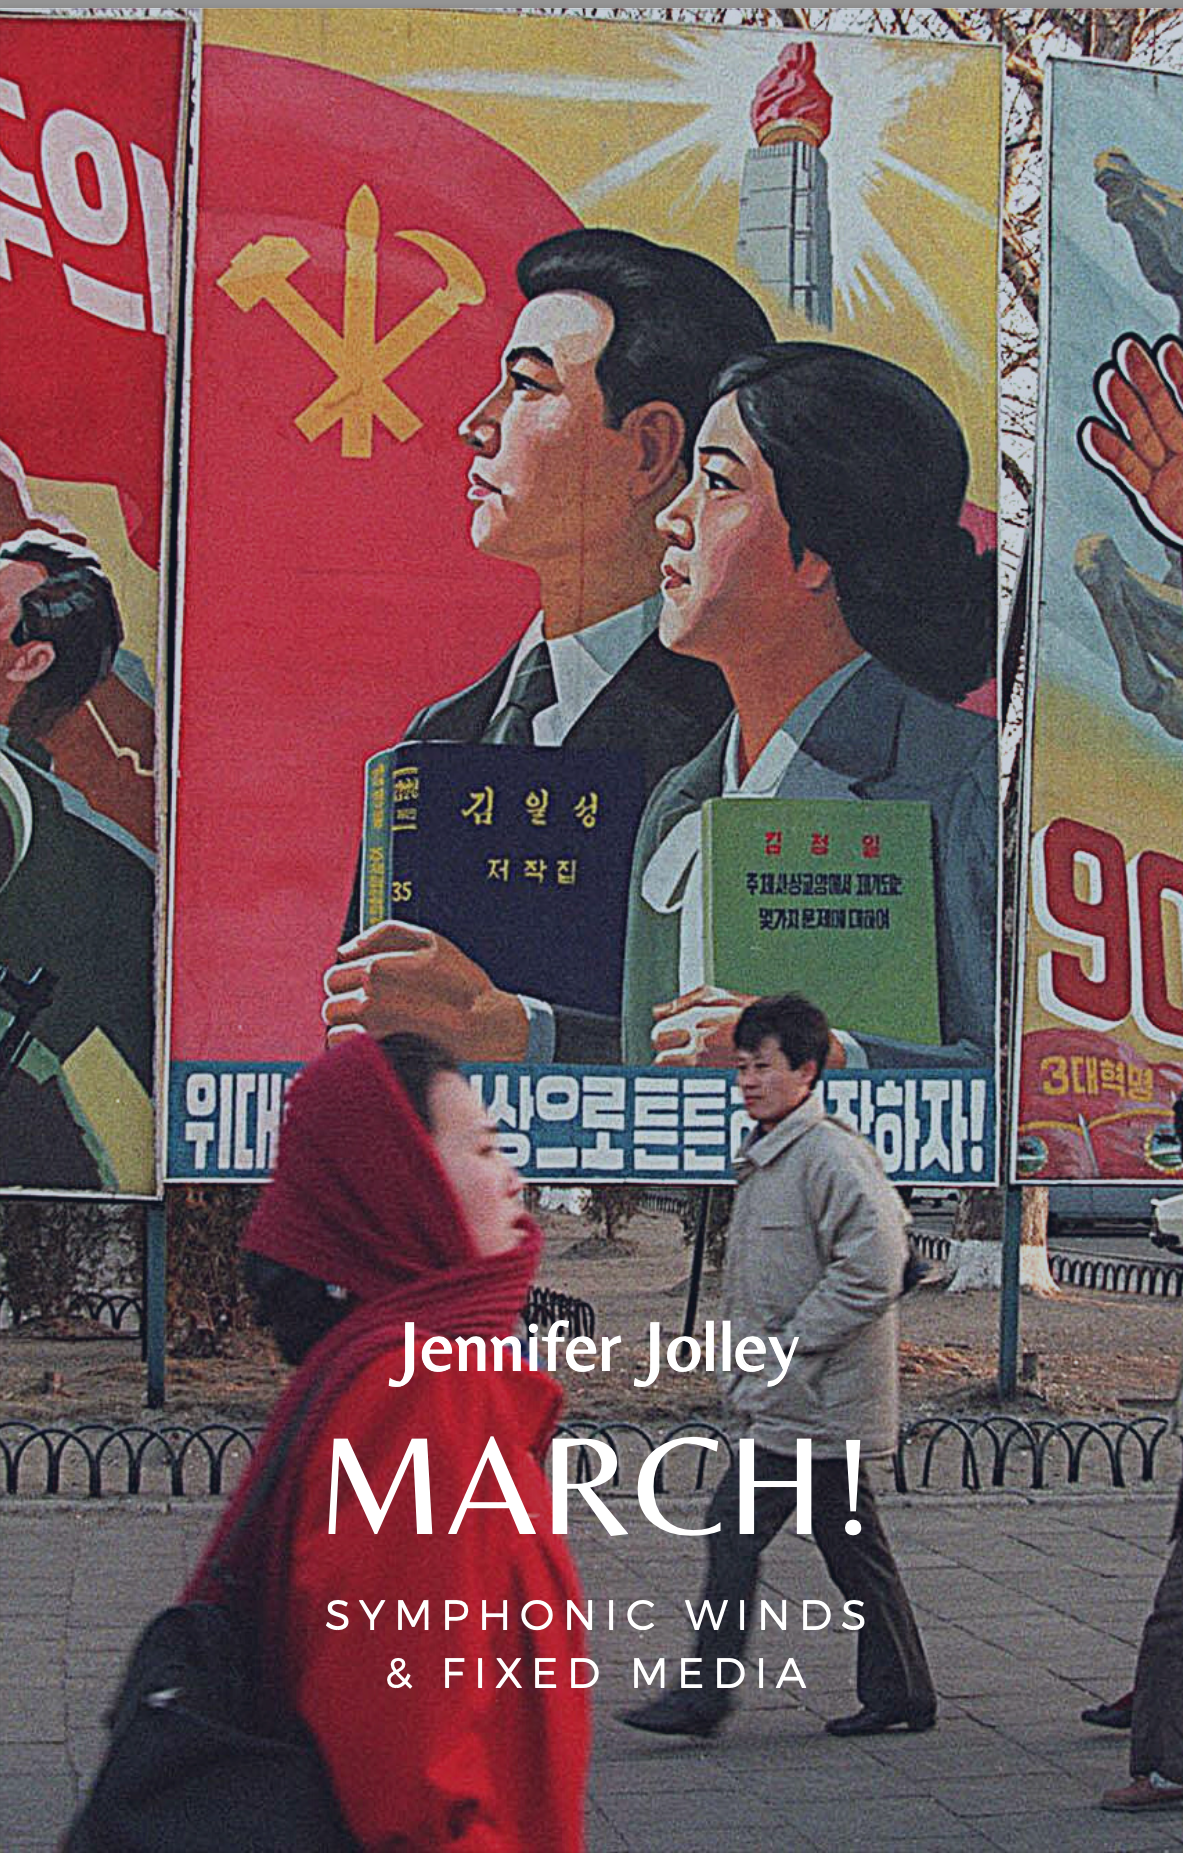 March! (Score Only) by Jennifer Jolley